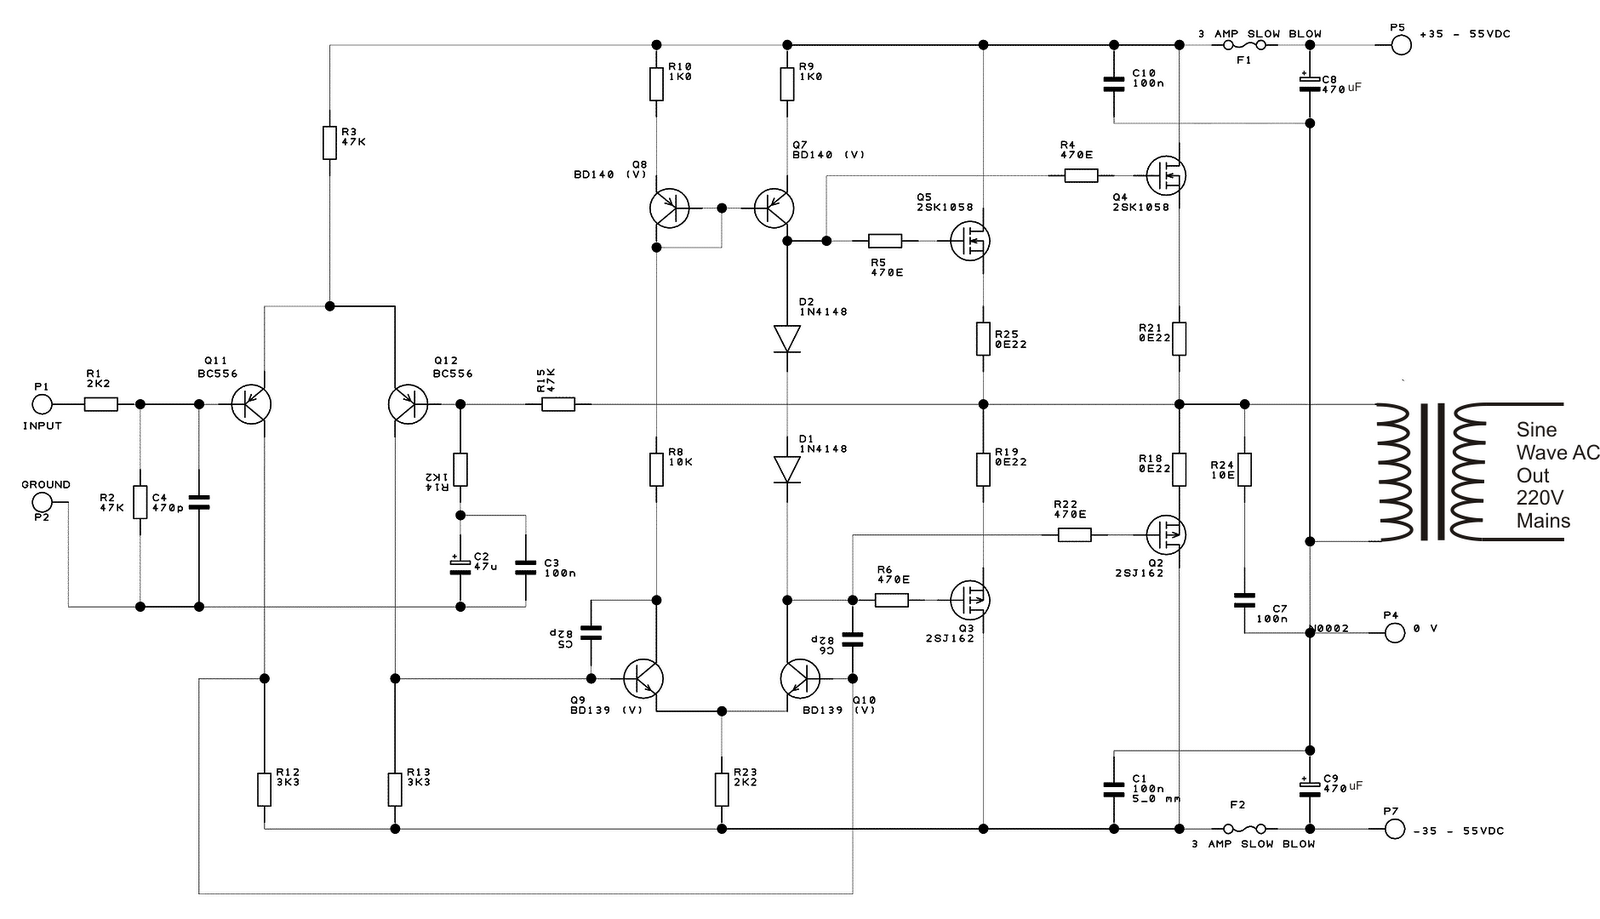  Transformer Wiring Diagram. on homemade solar generator wiring diagram